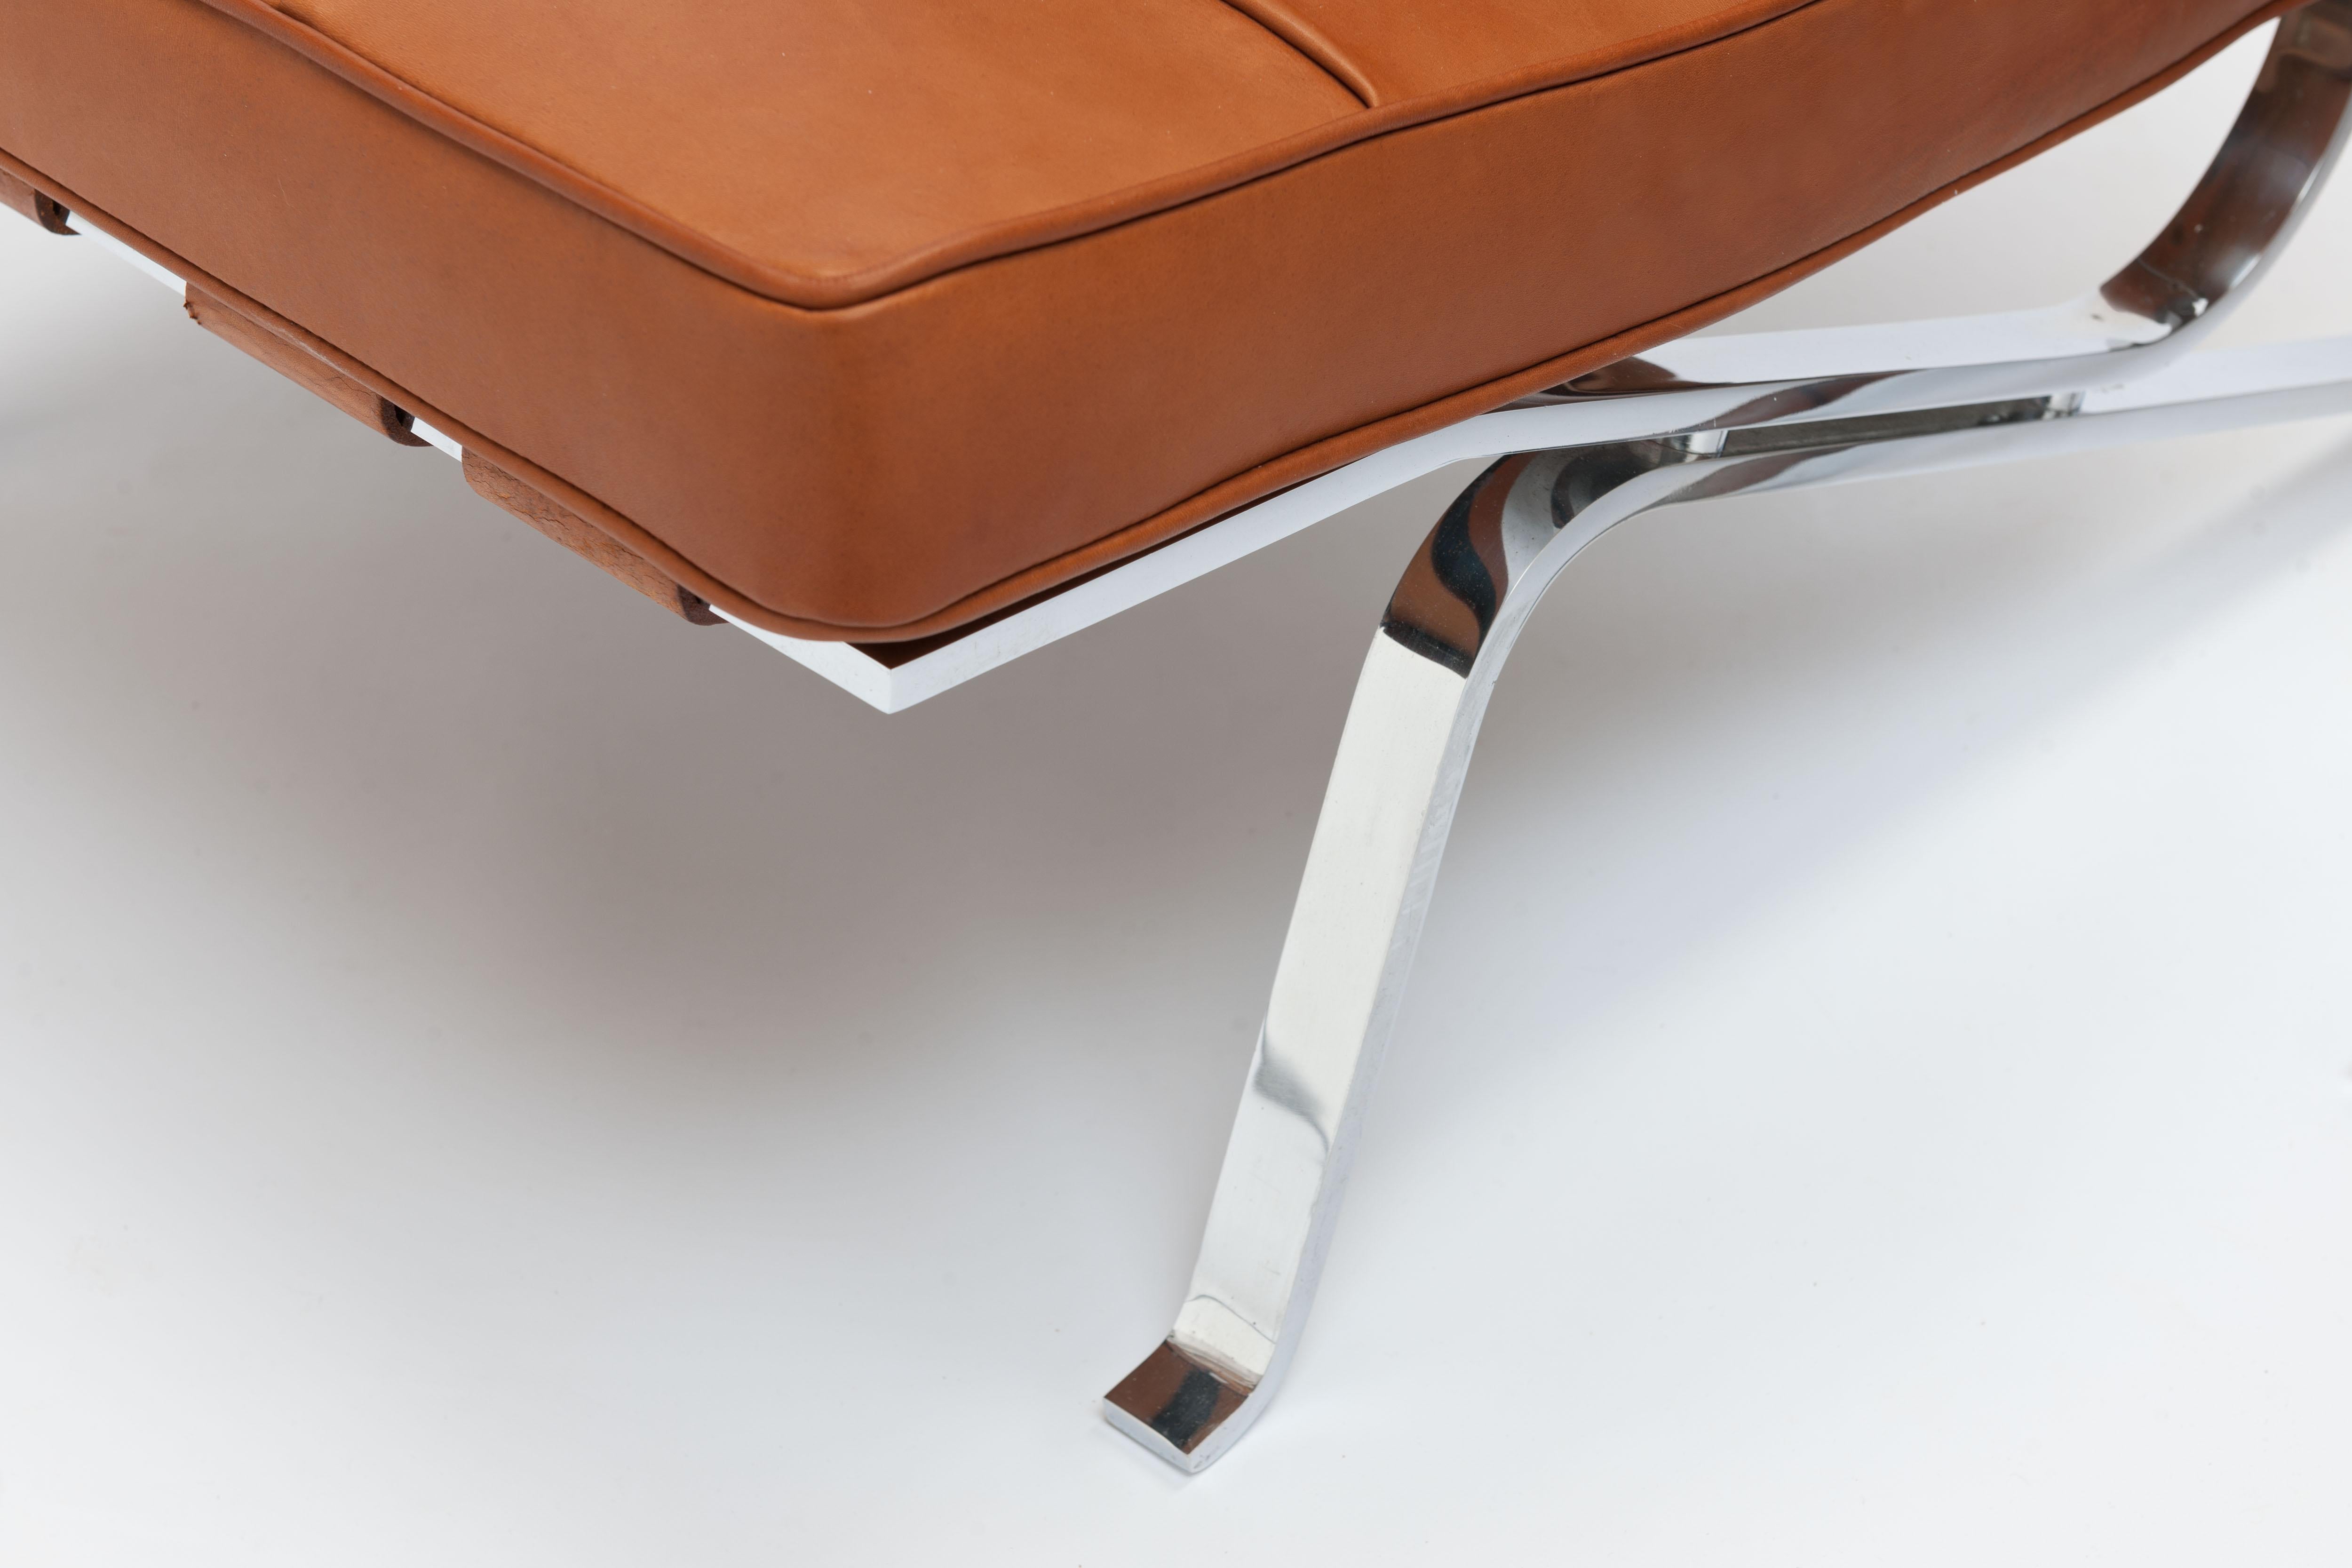 Steel Cognac Leather RH301 Lounge Chair by Robert Haussmann (Pair Available)